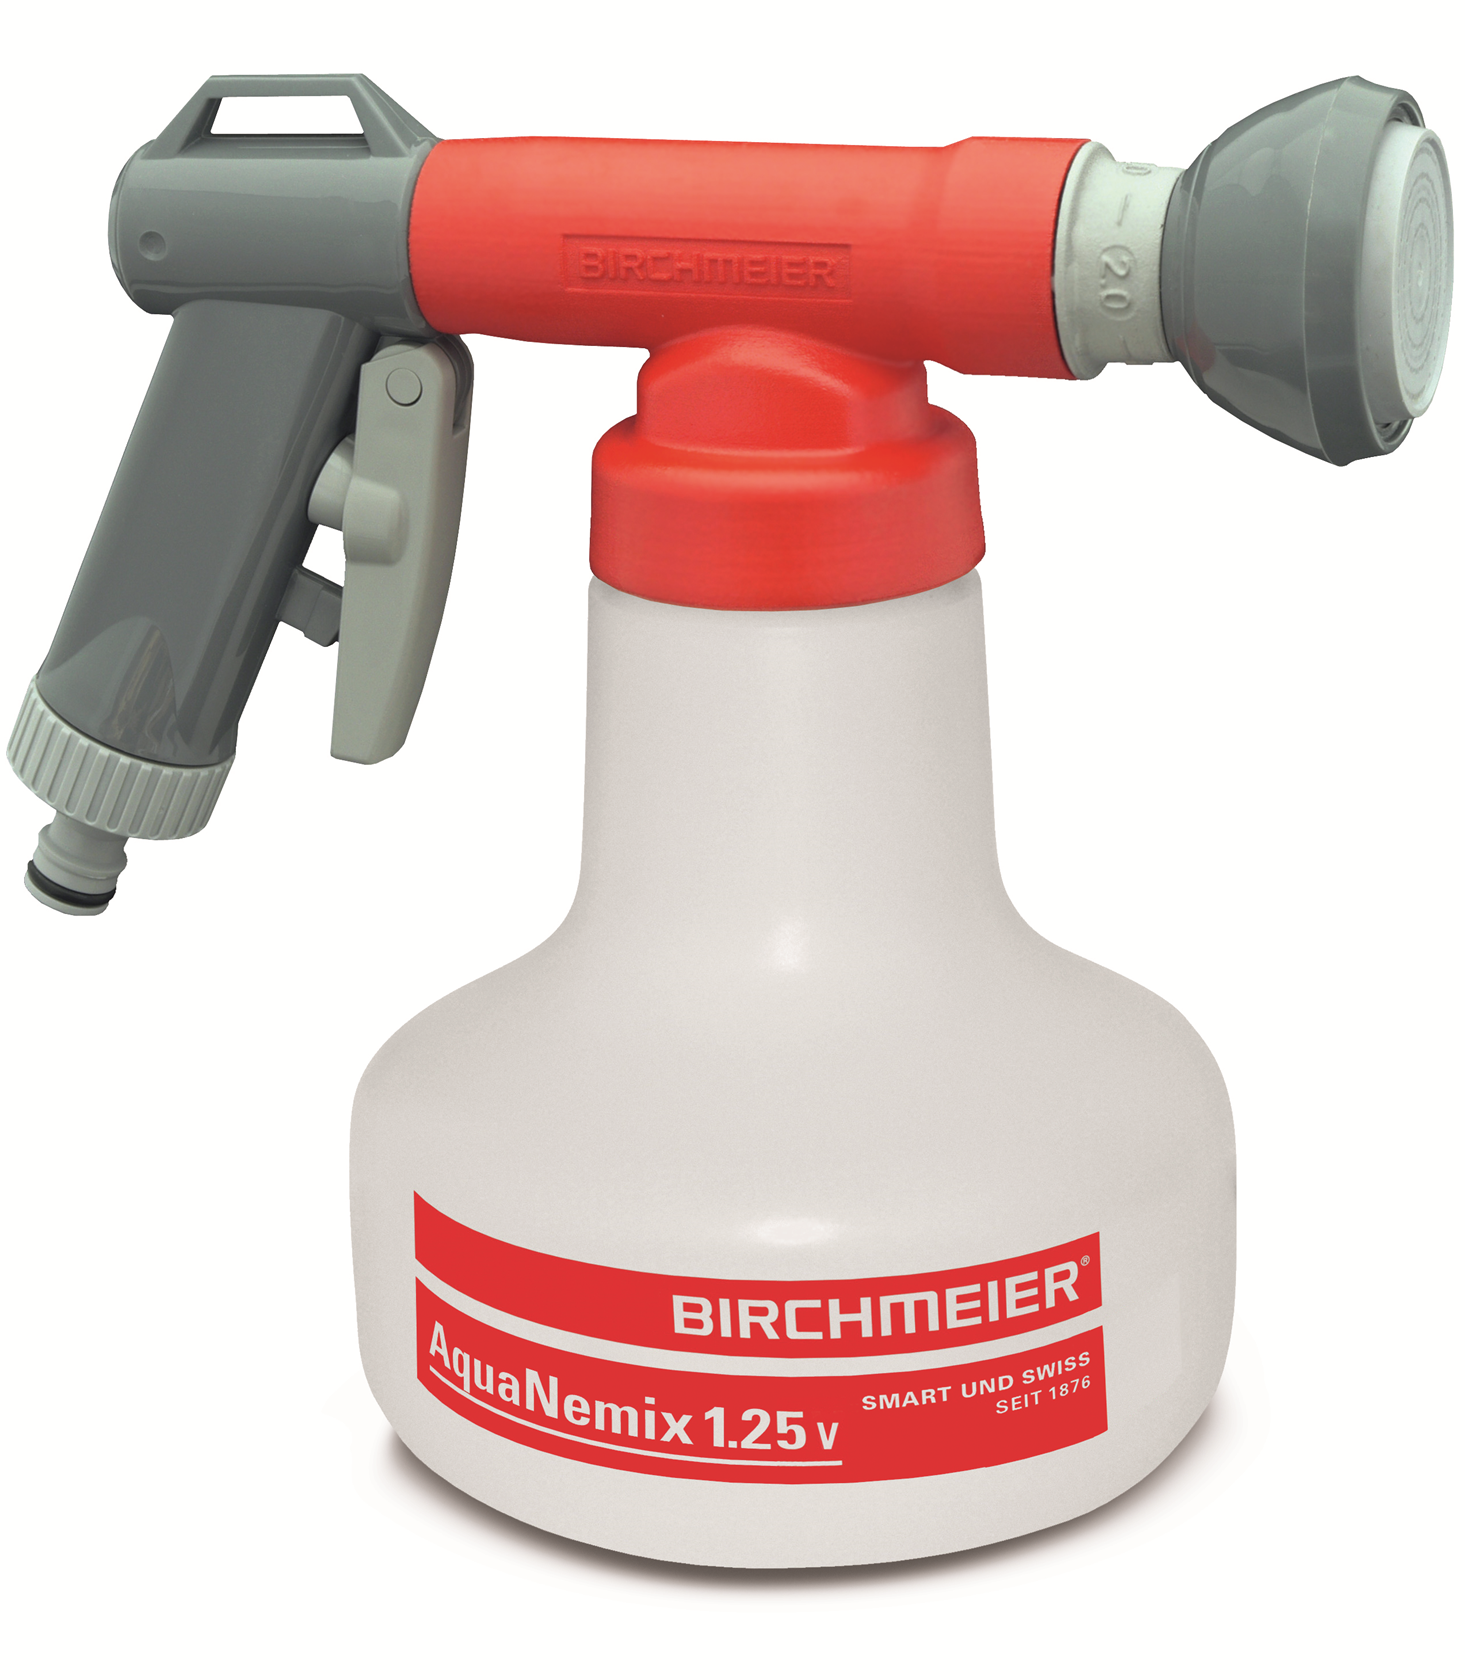 BIRCHMEIER-AQUANEMIX-125-V-1st